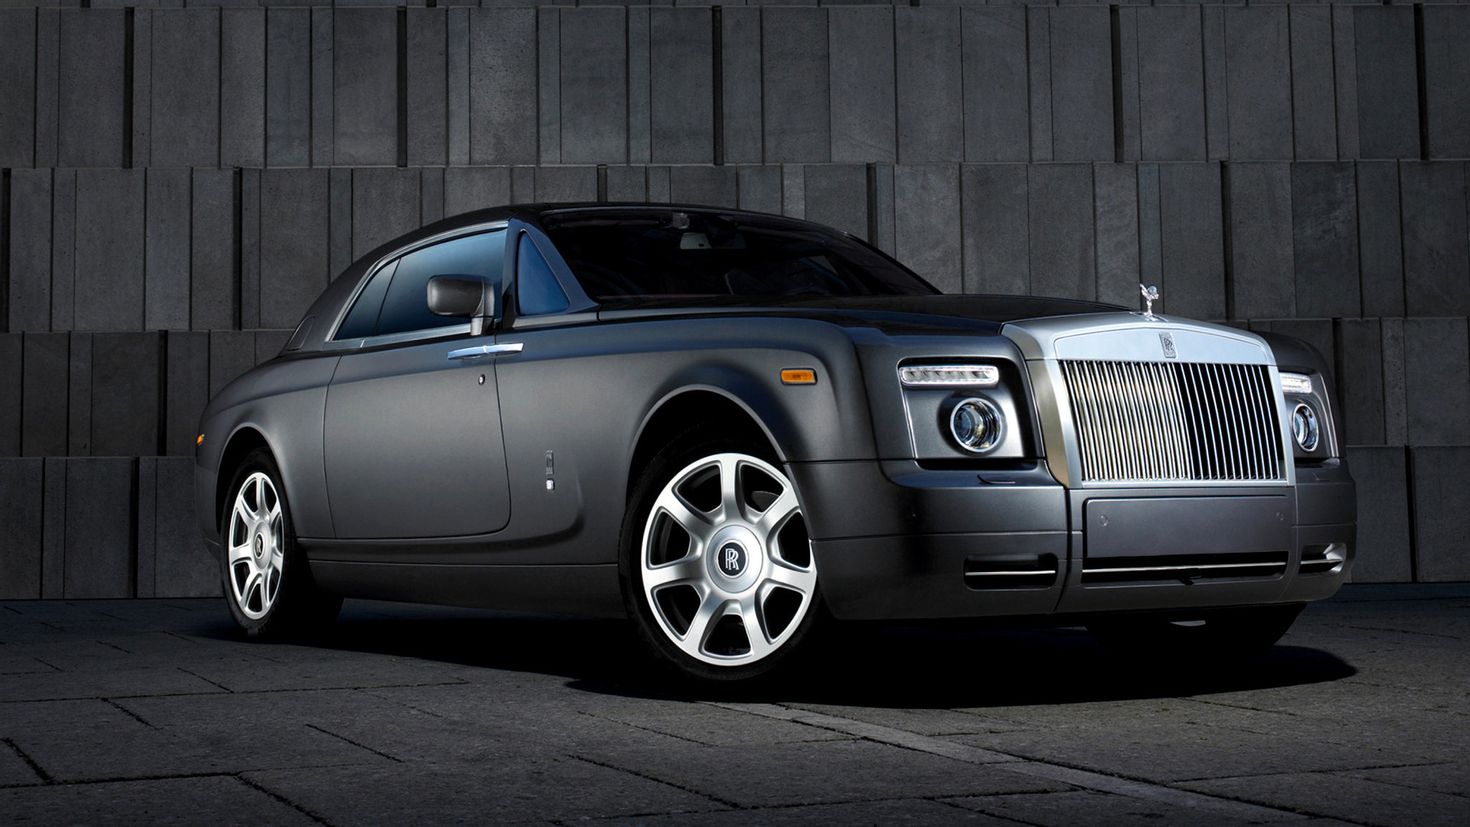 Rolls com. Машина Роллс Ройс Фантом. Роллс Ройс купе. Rolls Royce Phantom купе. Роллс Ройс Фантом купе 2008.